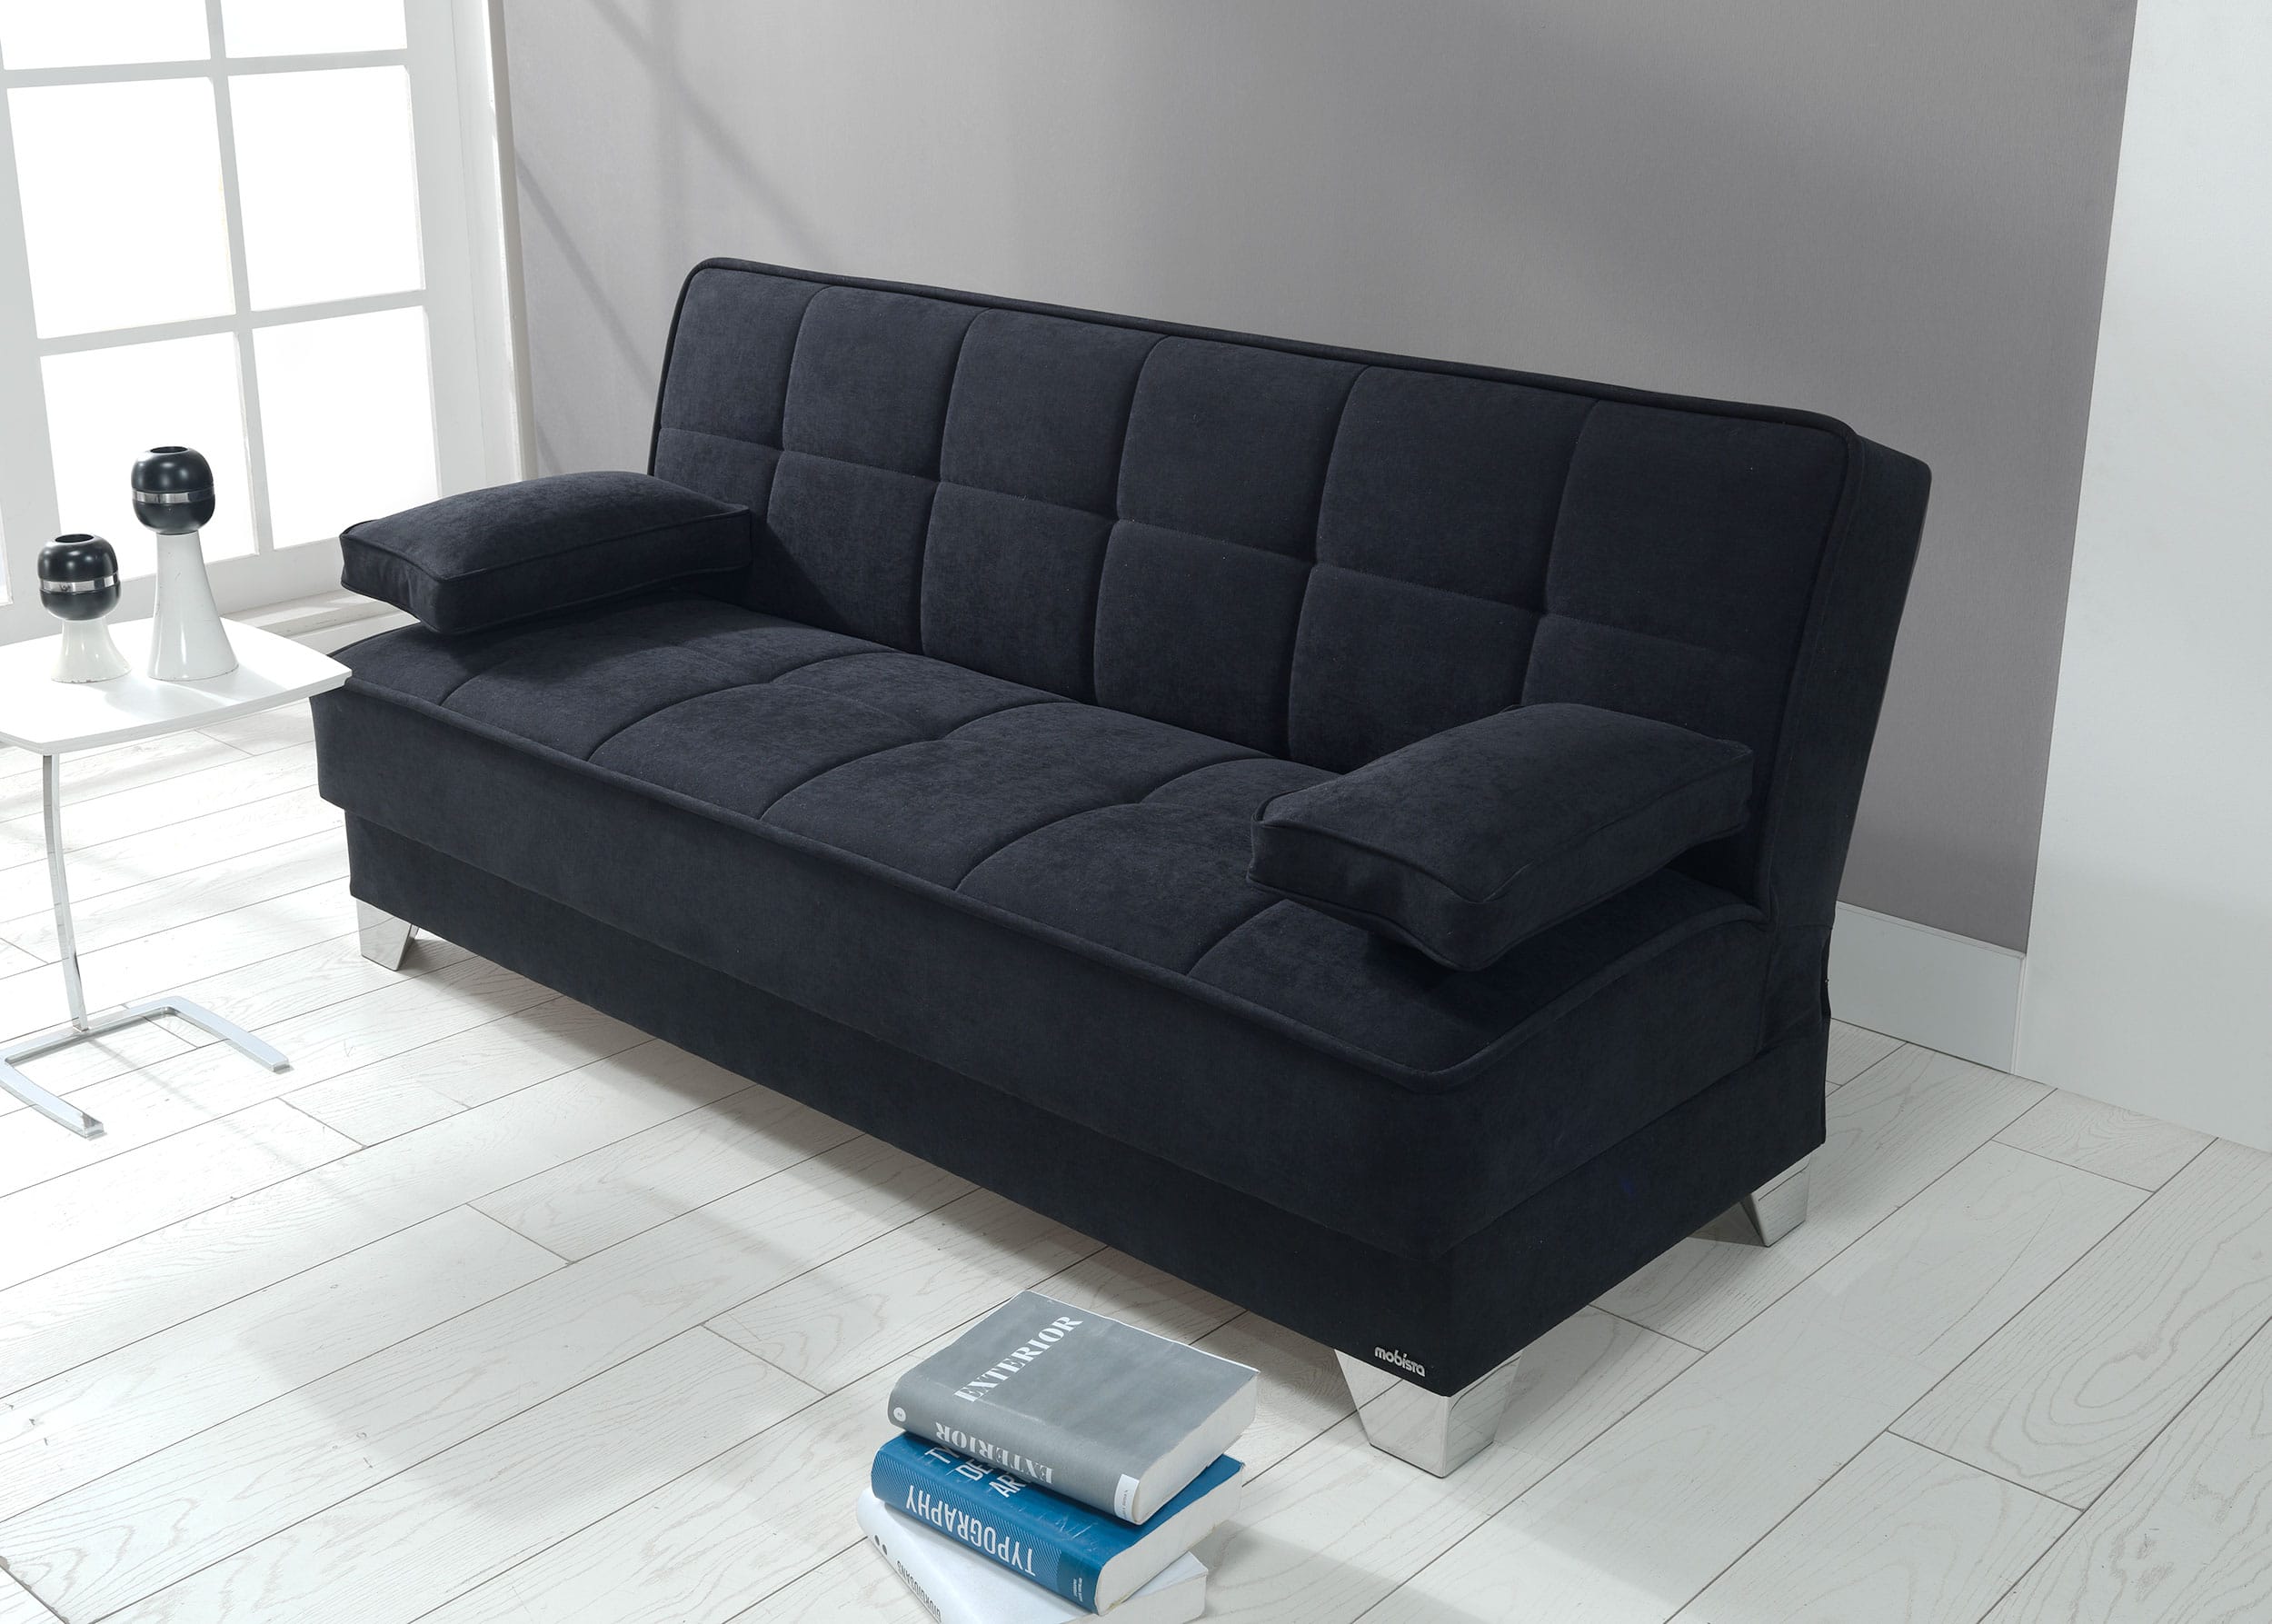 Nexo Carisma Black Sofa Bed By Mobista